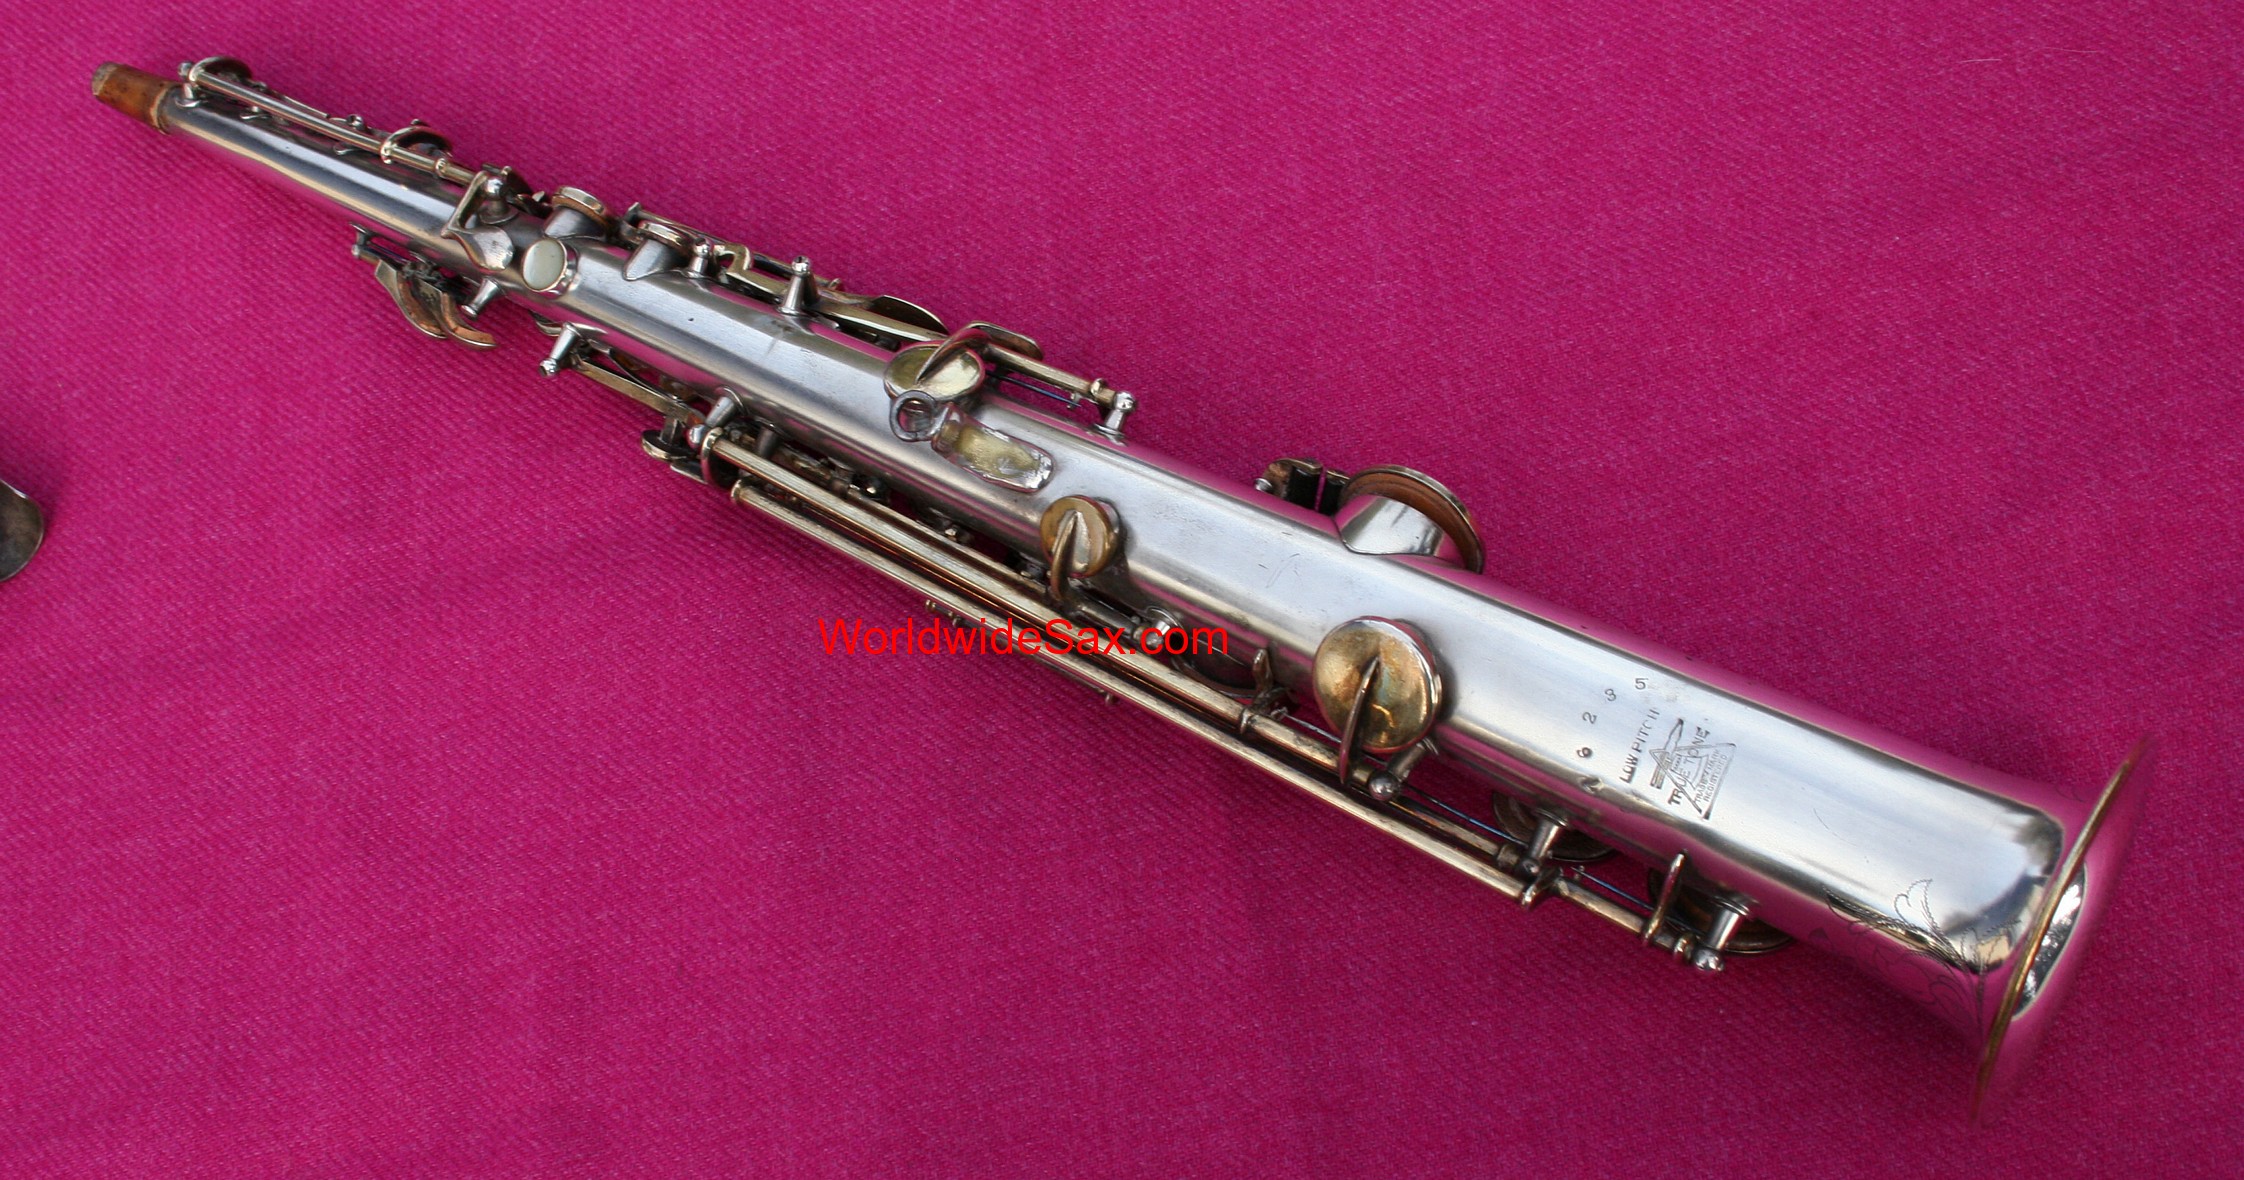 buescher 400 tenor sax serial numbers